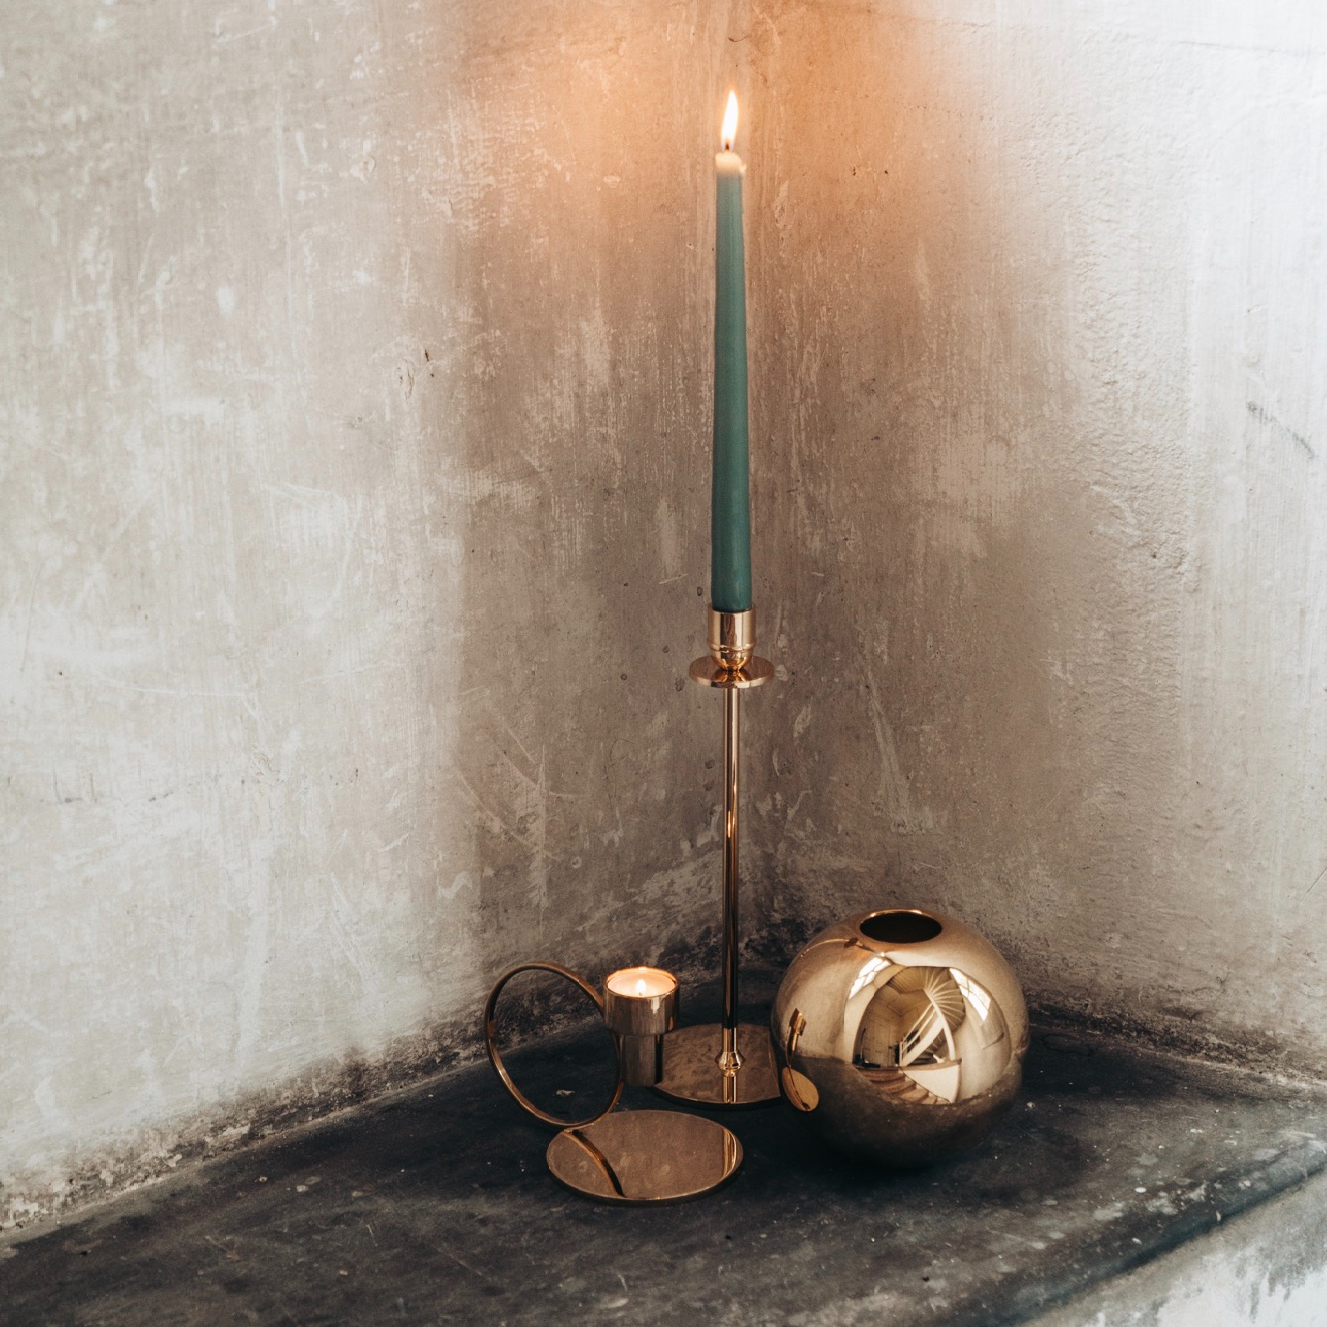 Hilke Collection Glanol Brass Polish - Accessories Candleholders & Candlesticks - 20190719